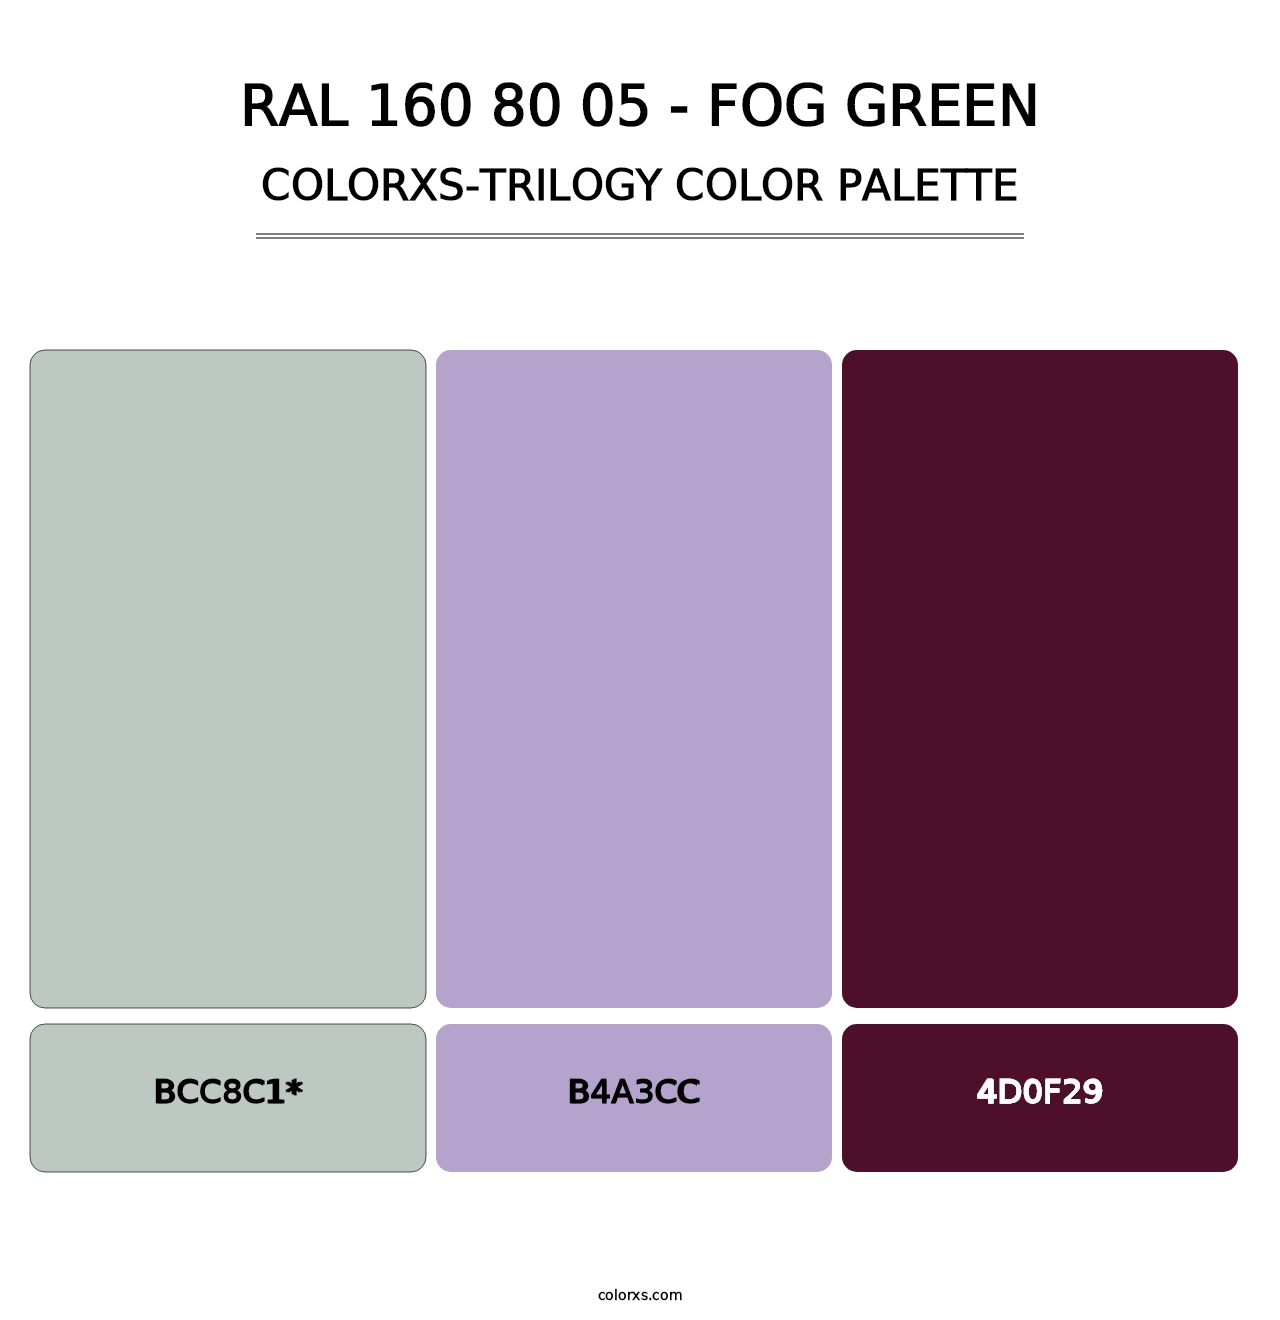 RAL 160 80 05 - Fog Green - Colorxs Trilogy Palette